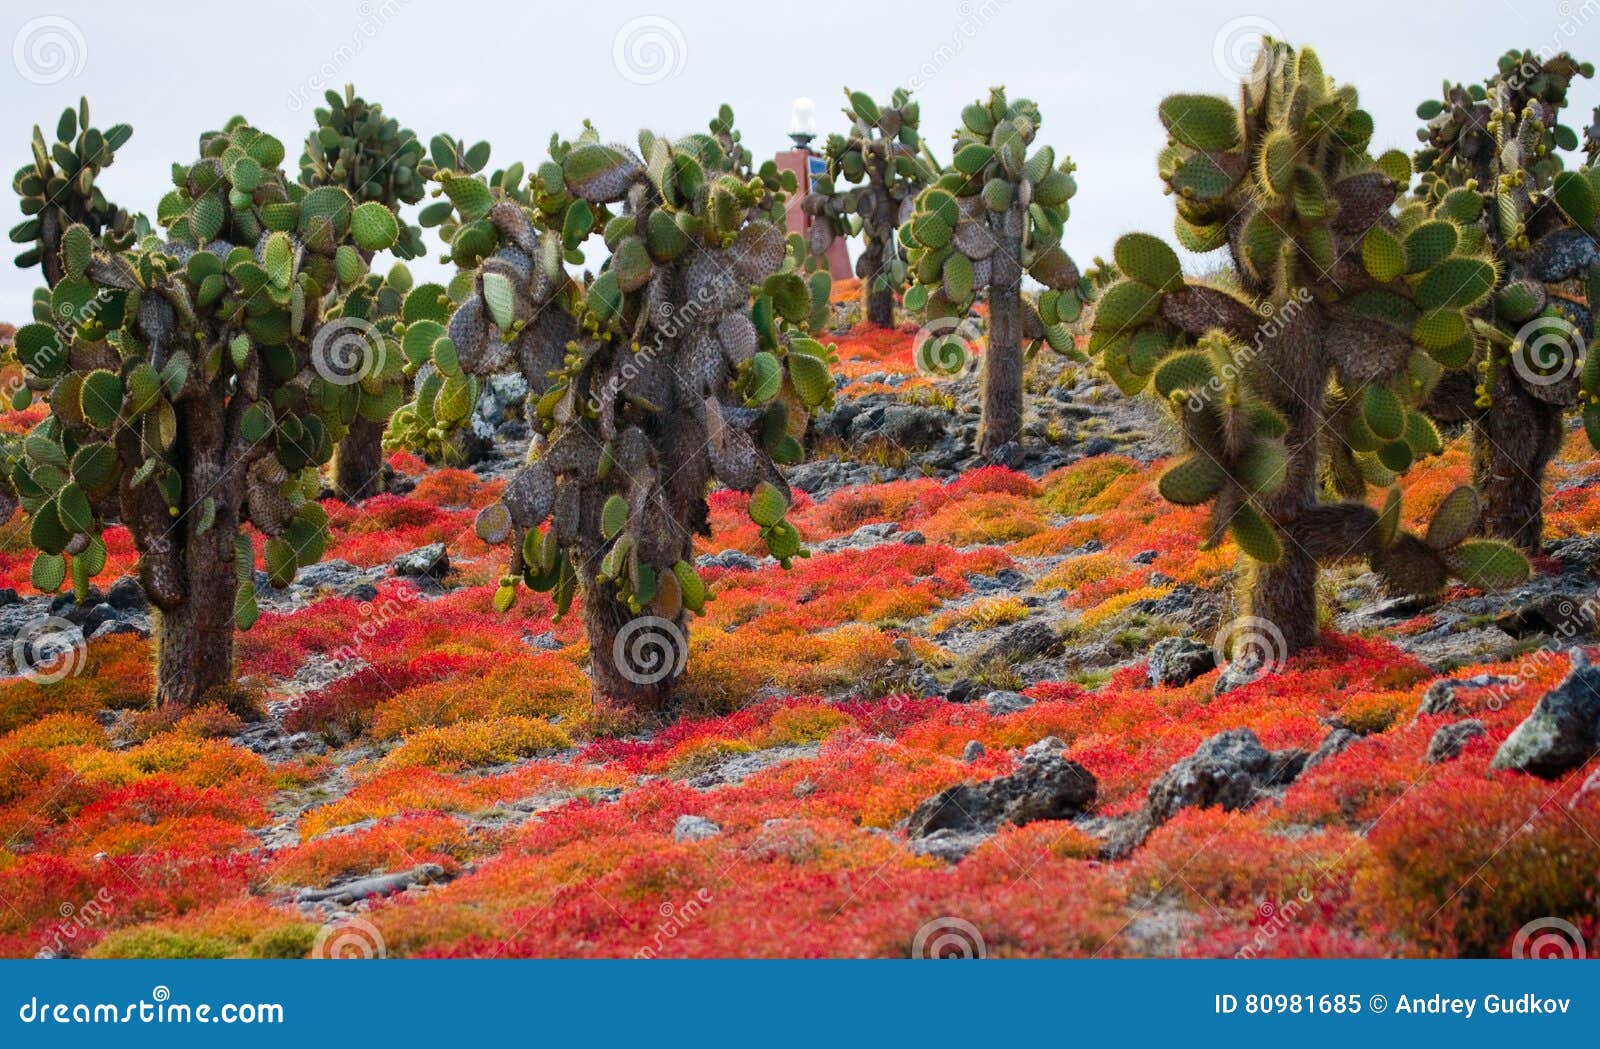 prickly pear cactus on the island. the galapagos islands. ecuador.